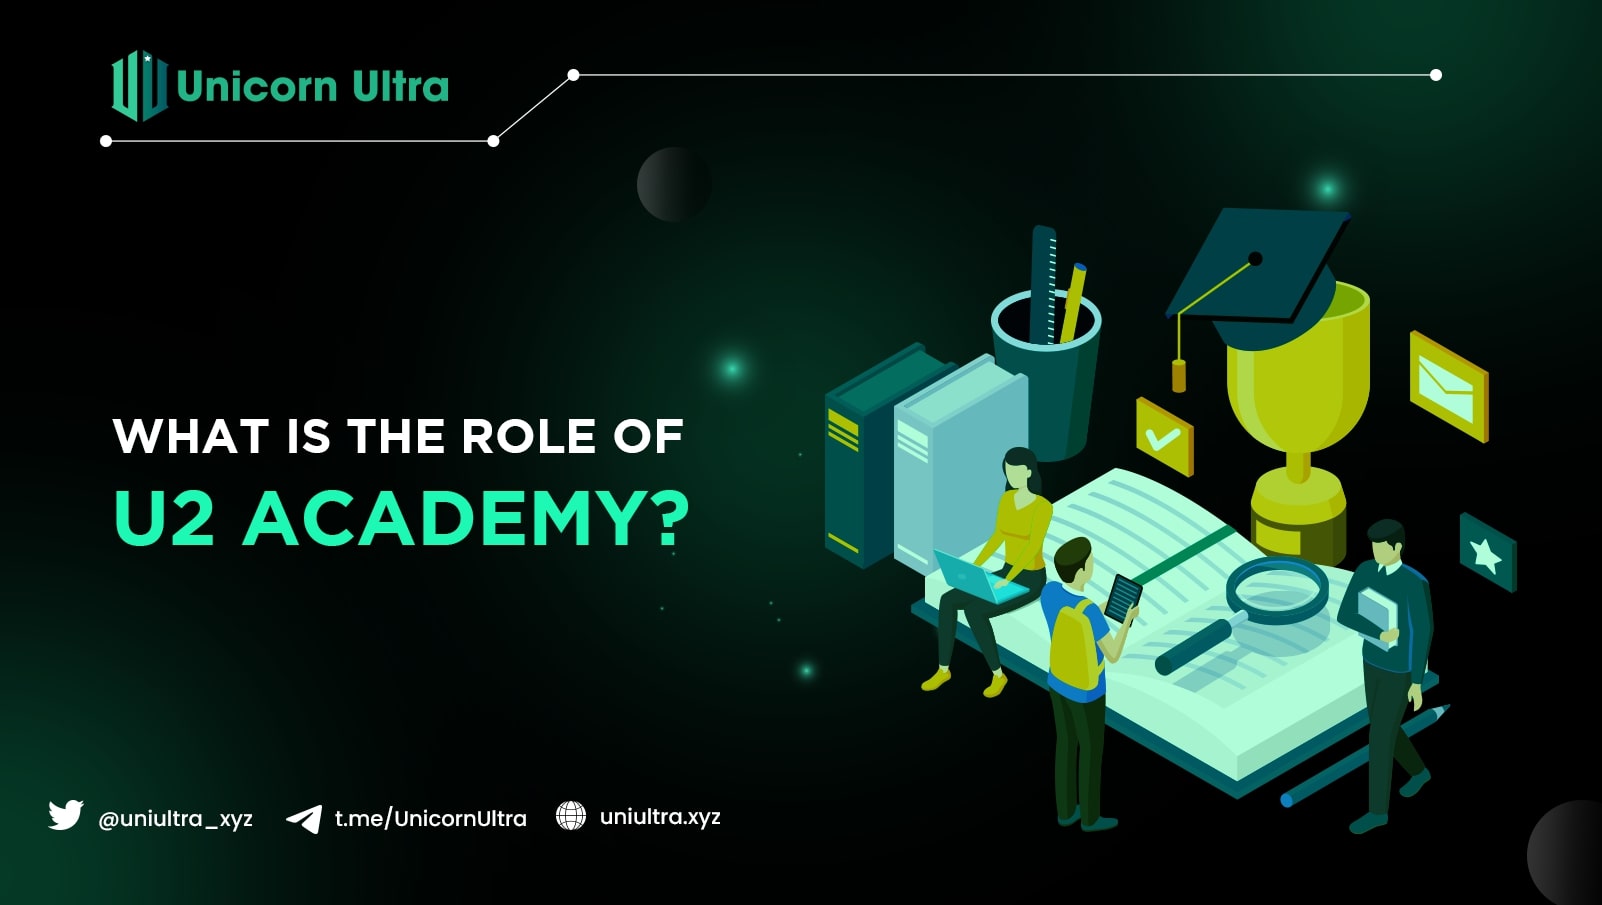 the role of u2 academy